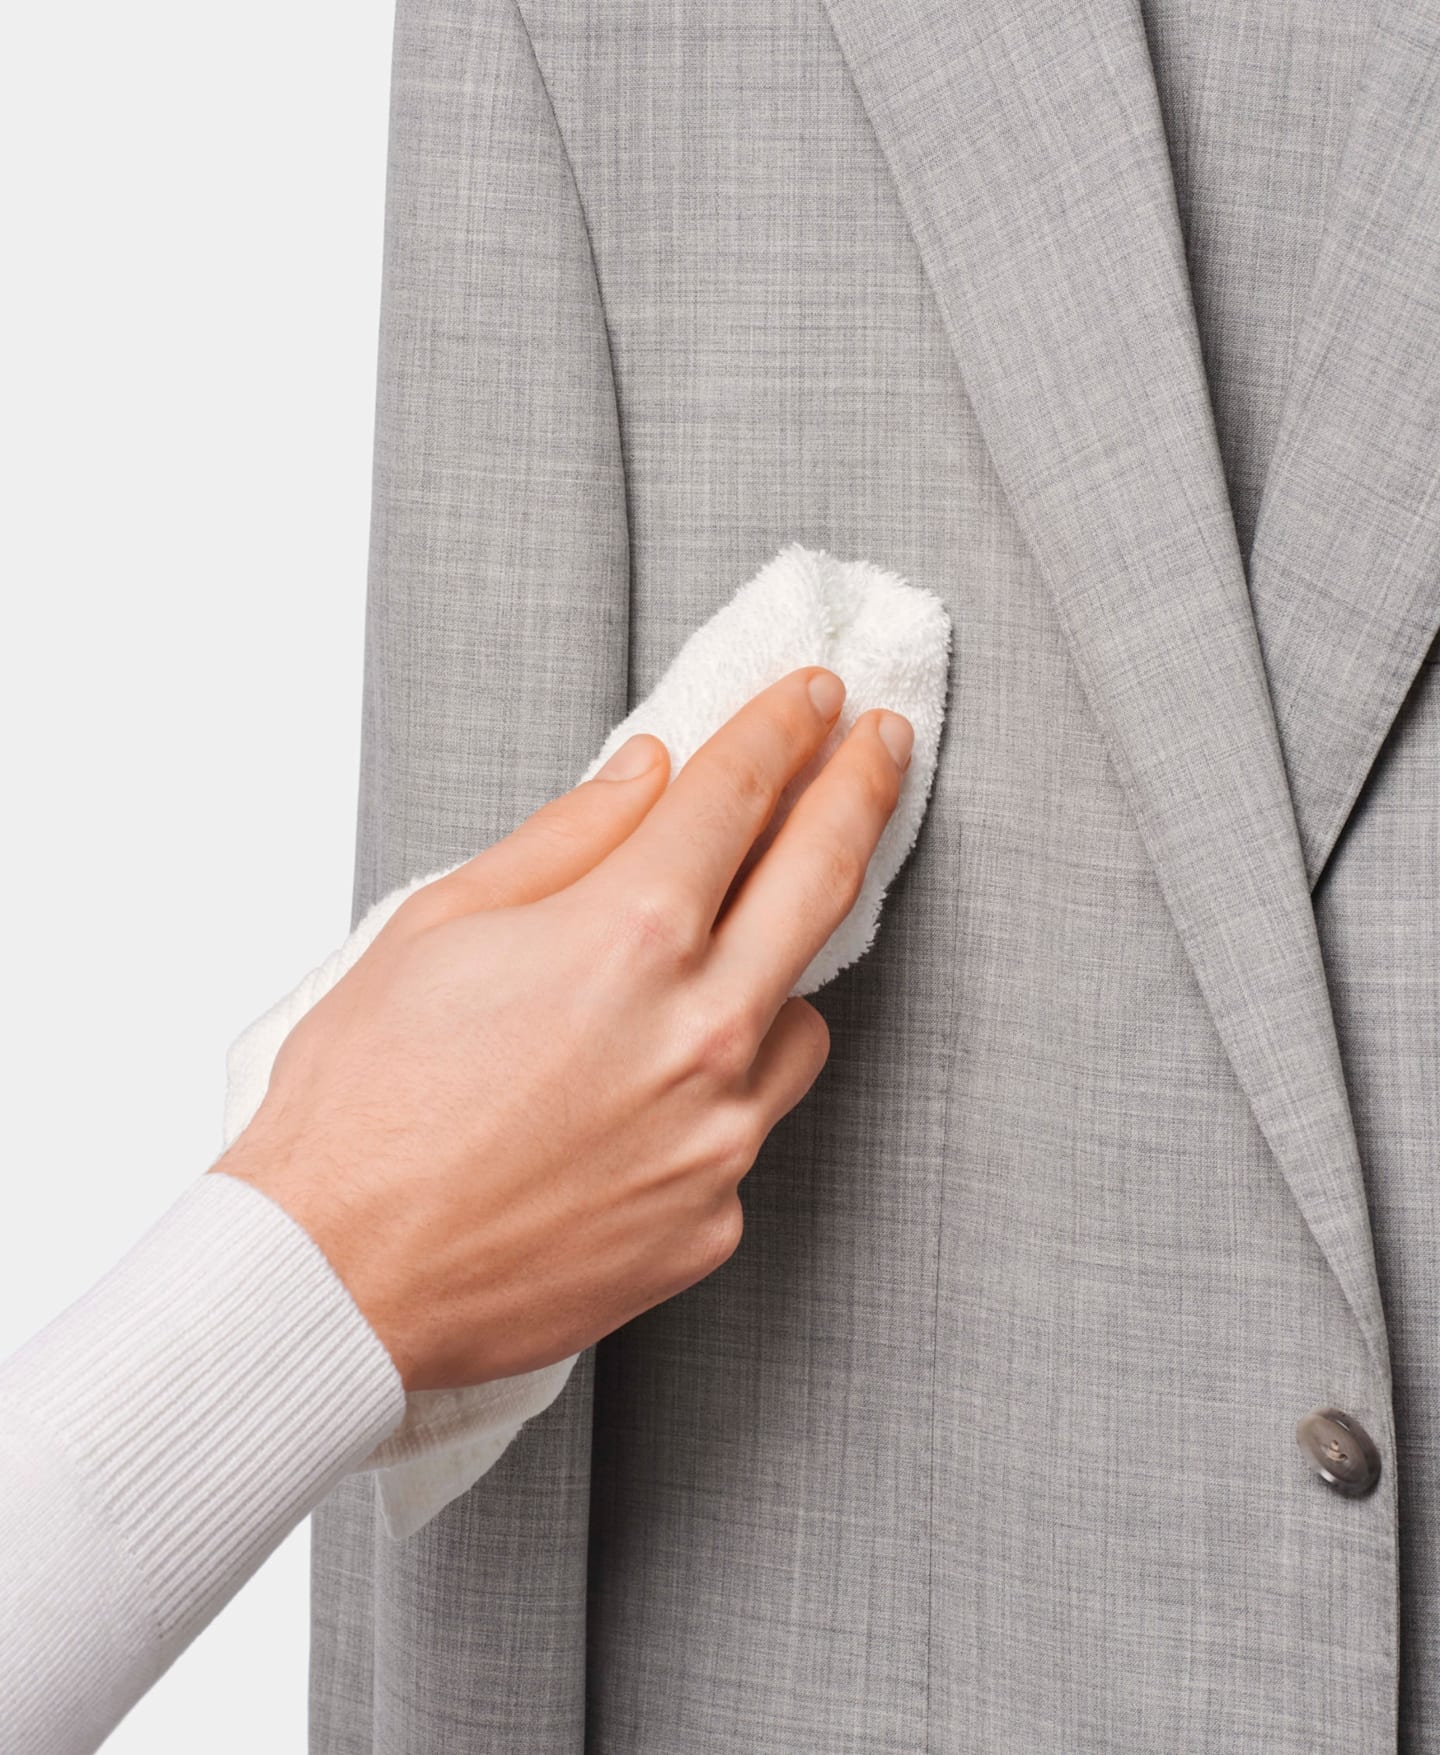 Eliminación de manchas de un blazer gris claro con un paño húmedo